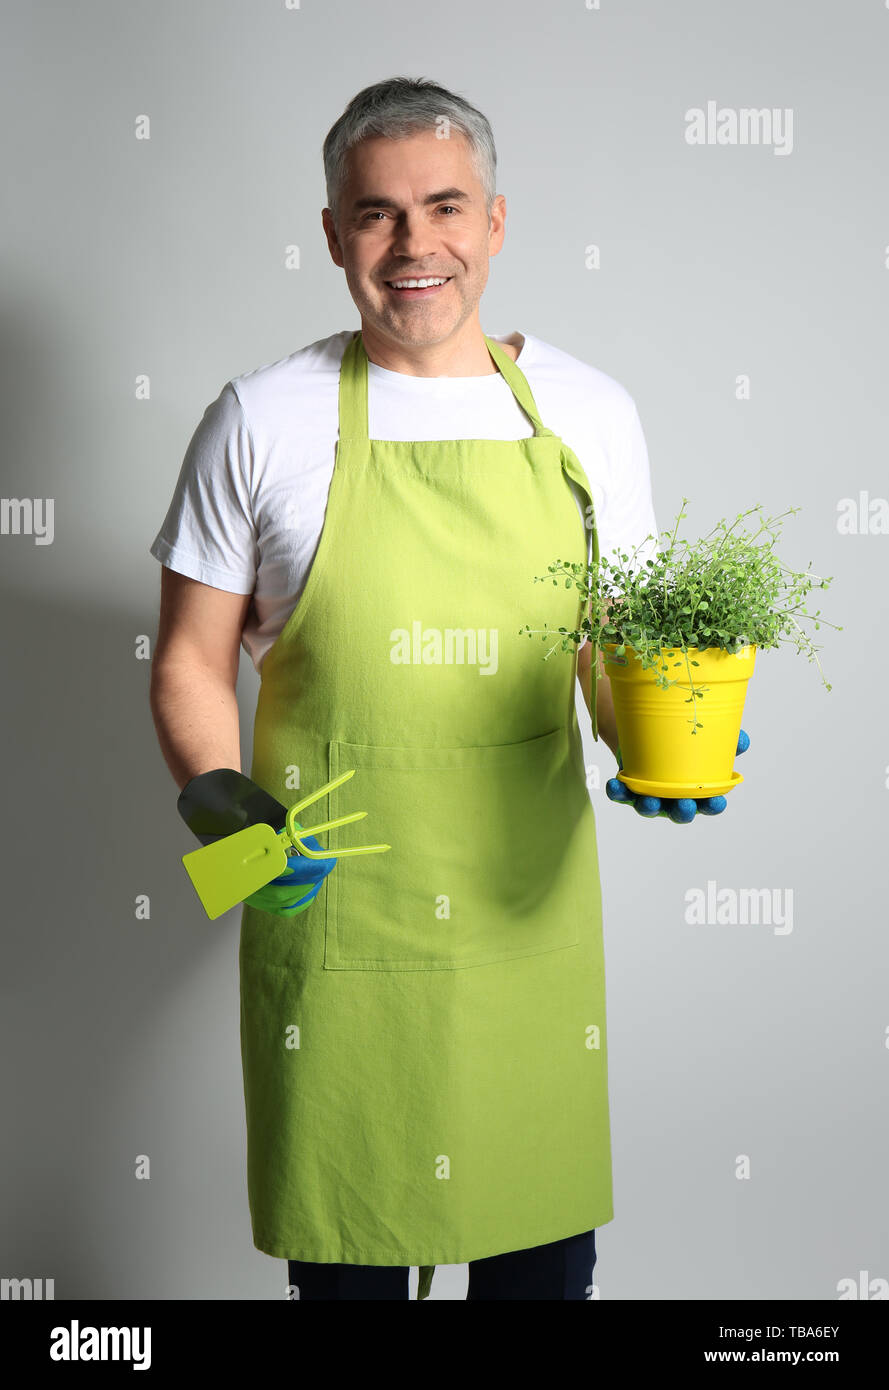 Mature male gardener on grey background Stock Photo